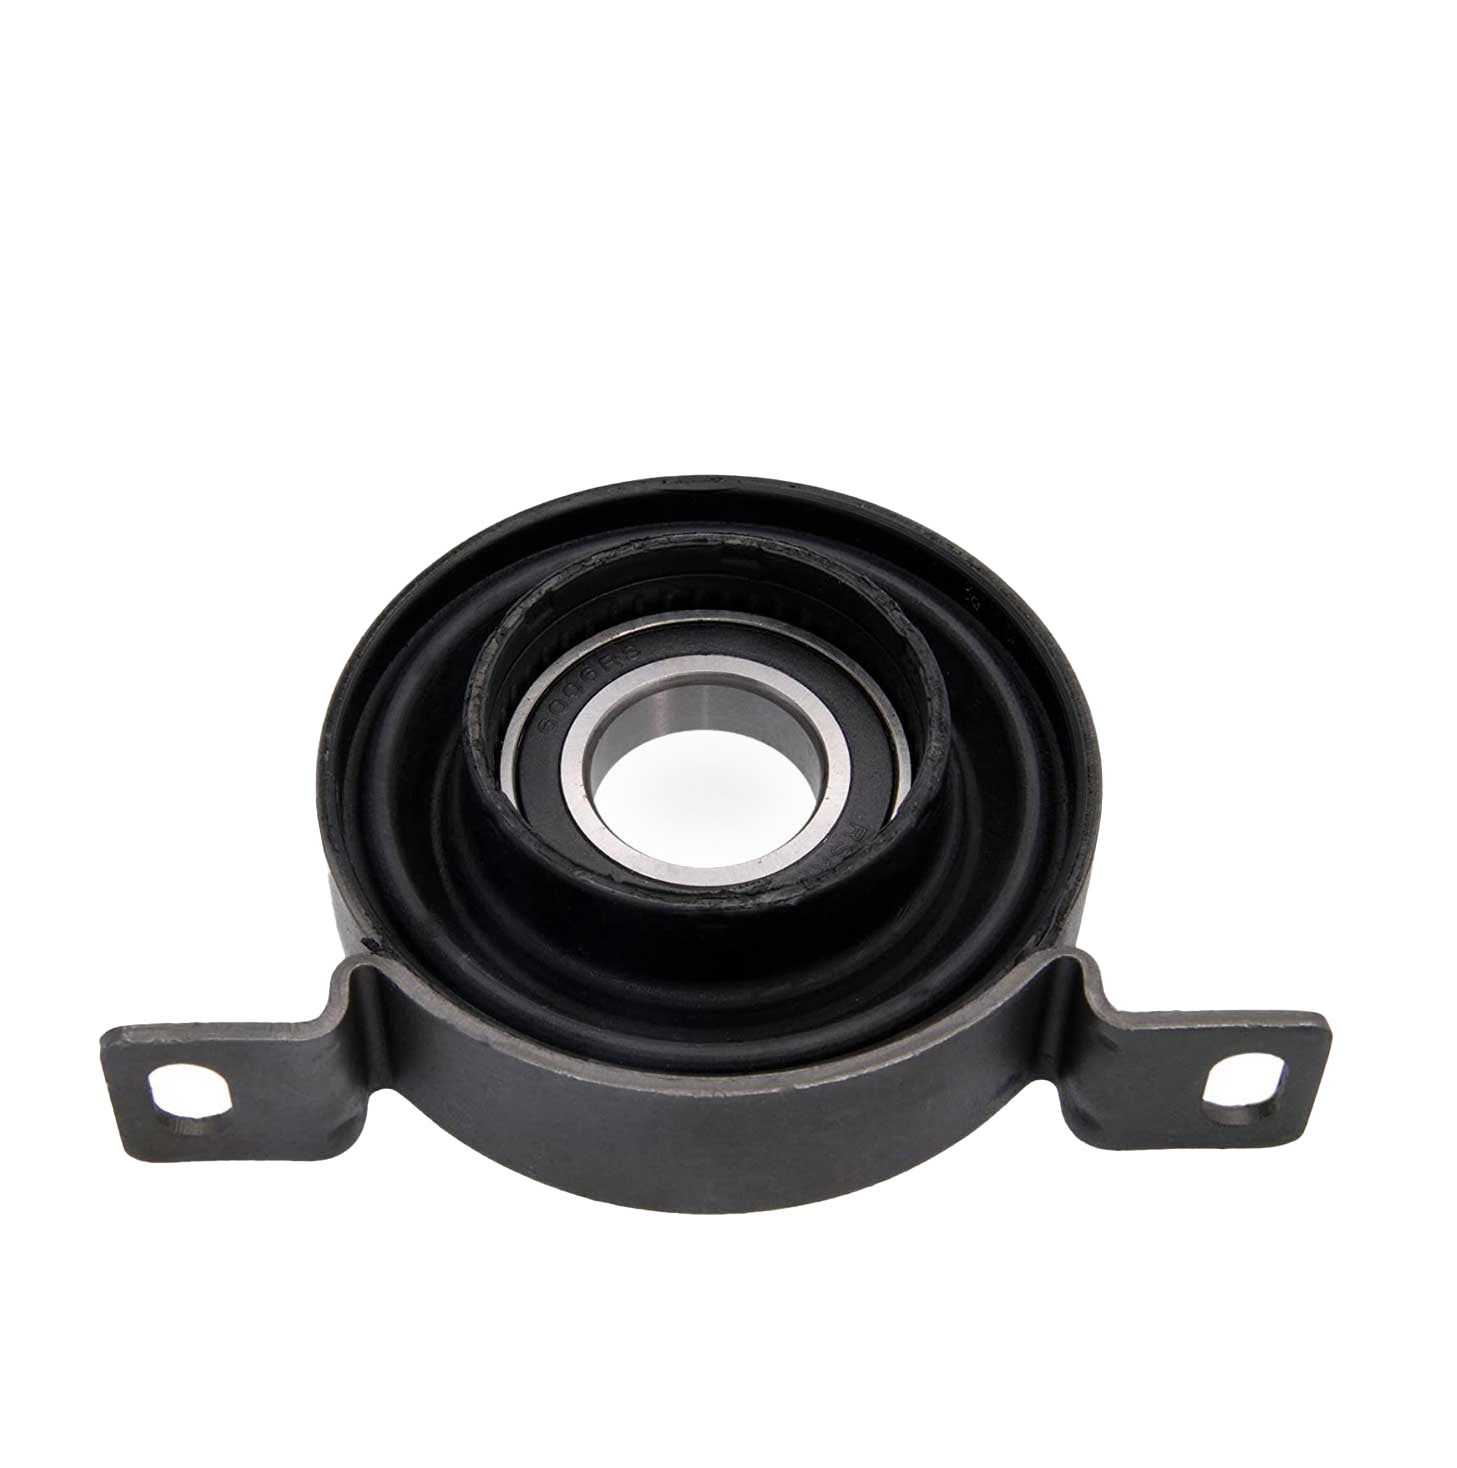 Febi Propshaft bearing (Febi # 23533) For BMW X5 26121229726